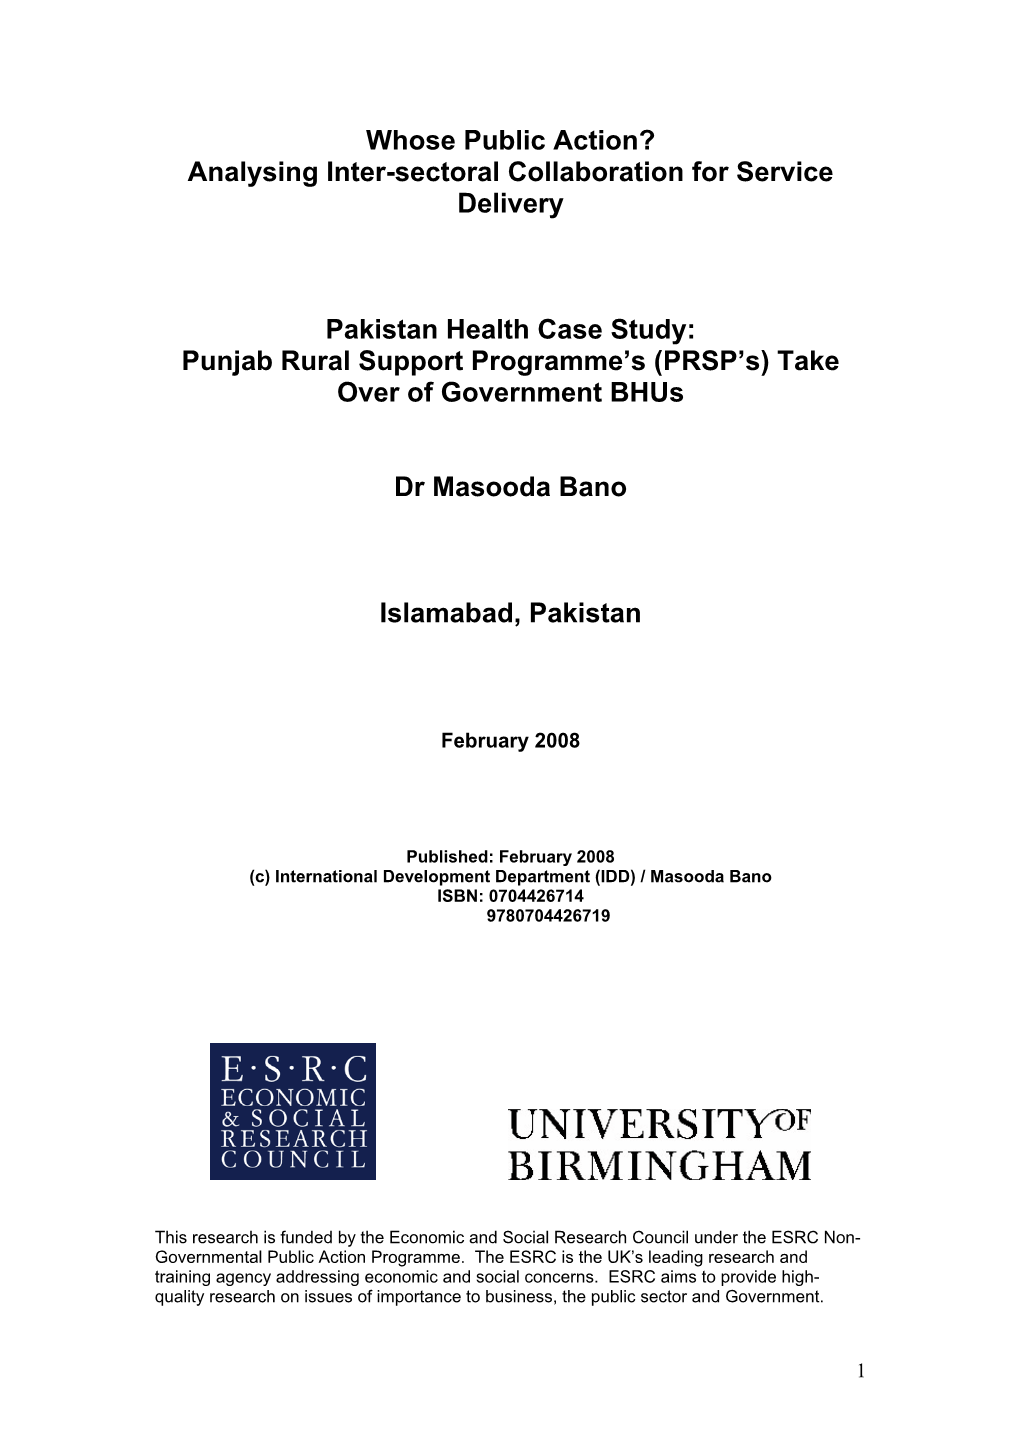 Punjab Rural Support Programme (Health)